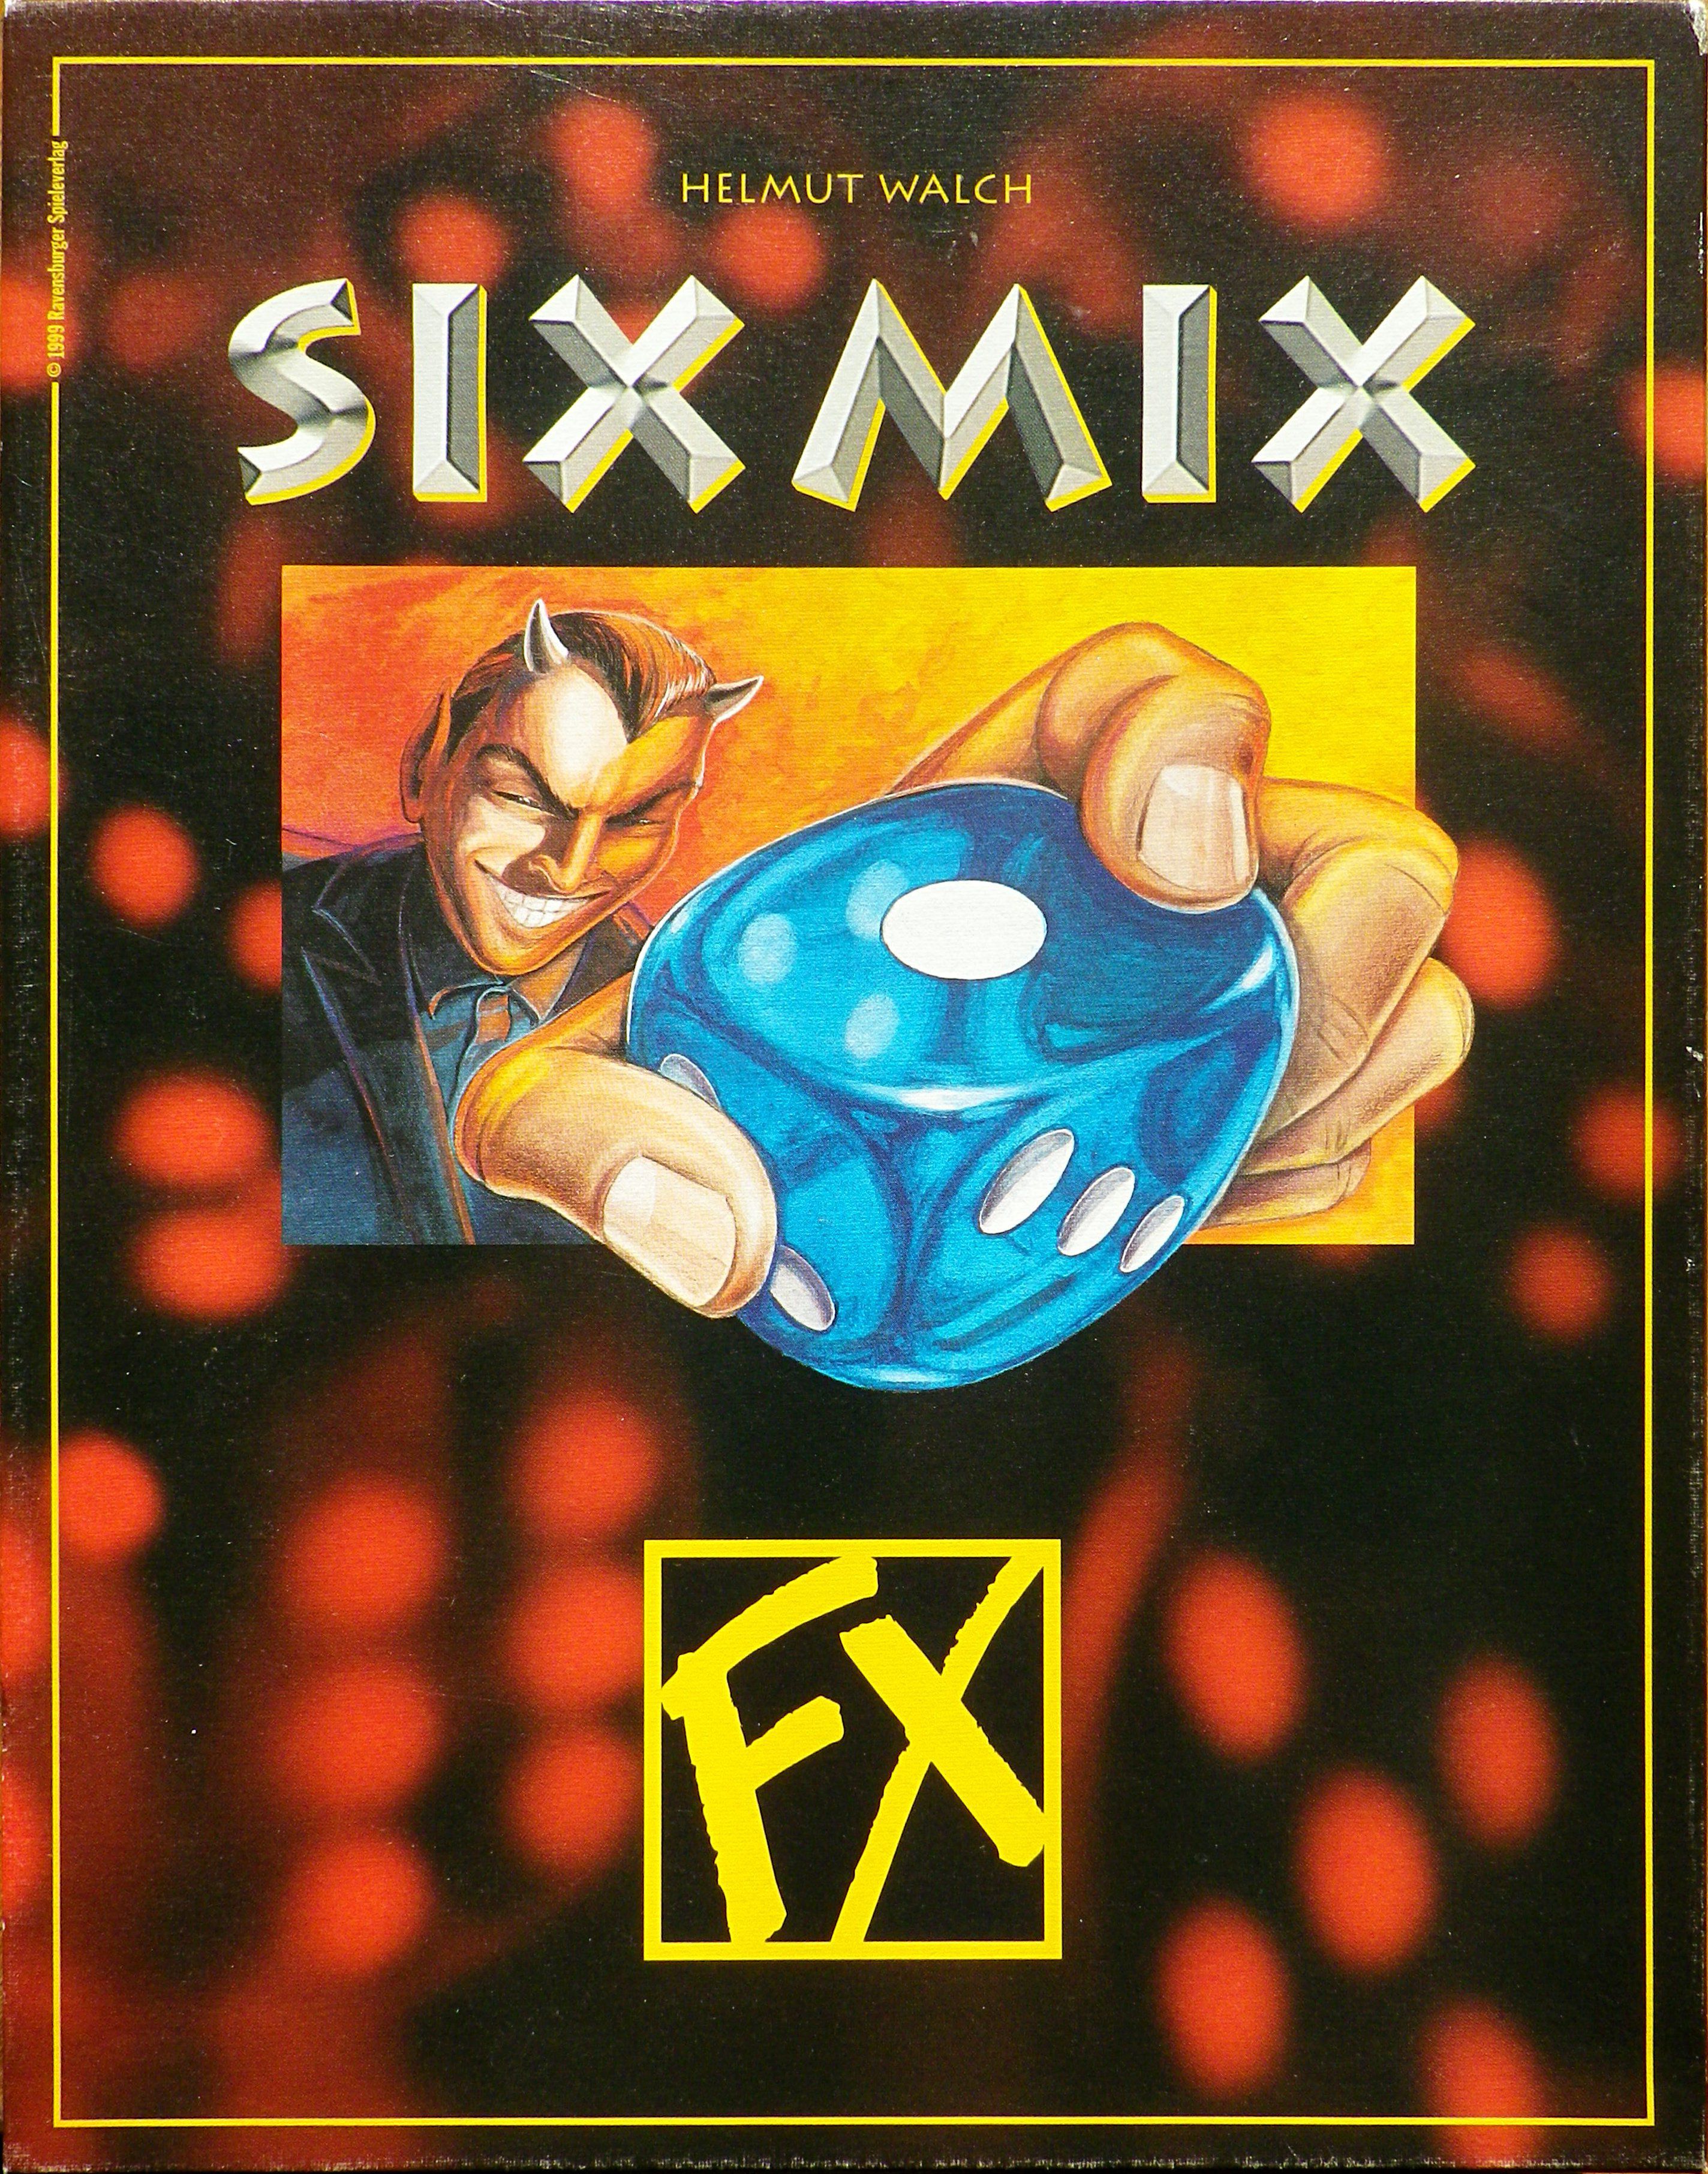 Sixmix